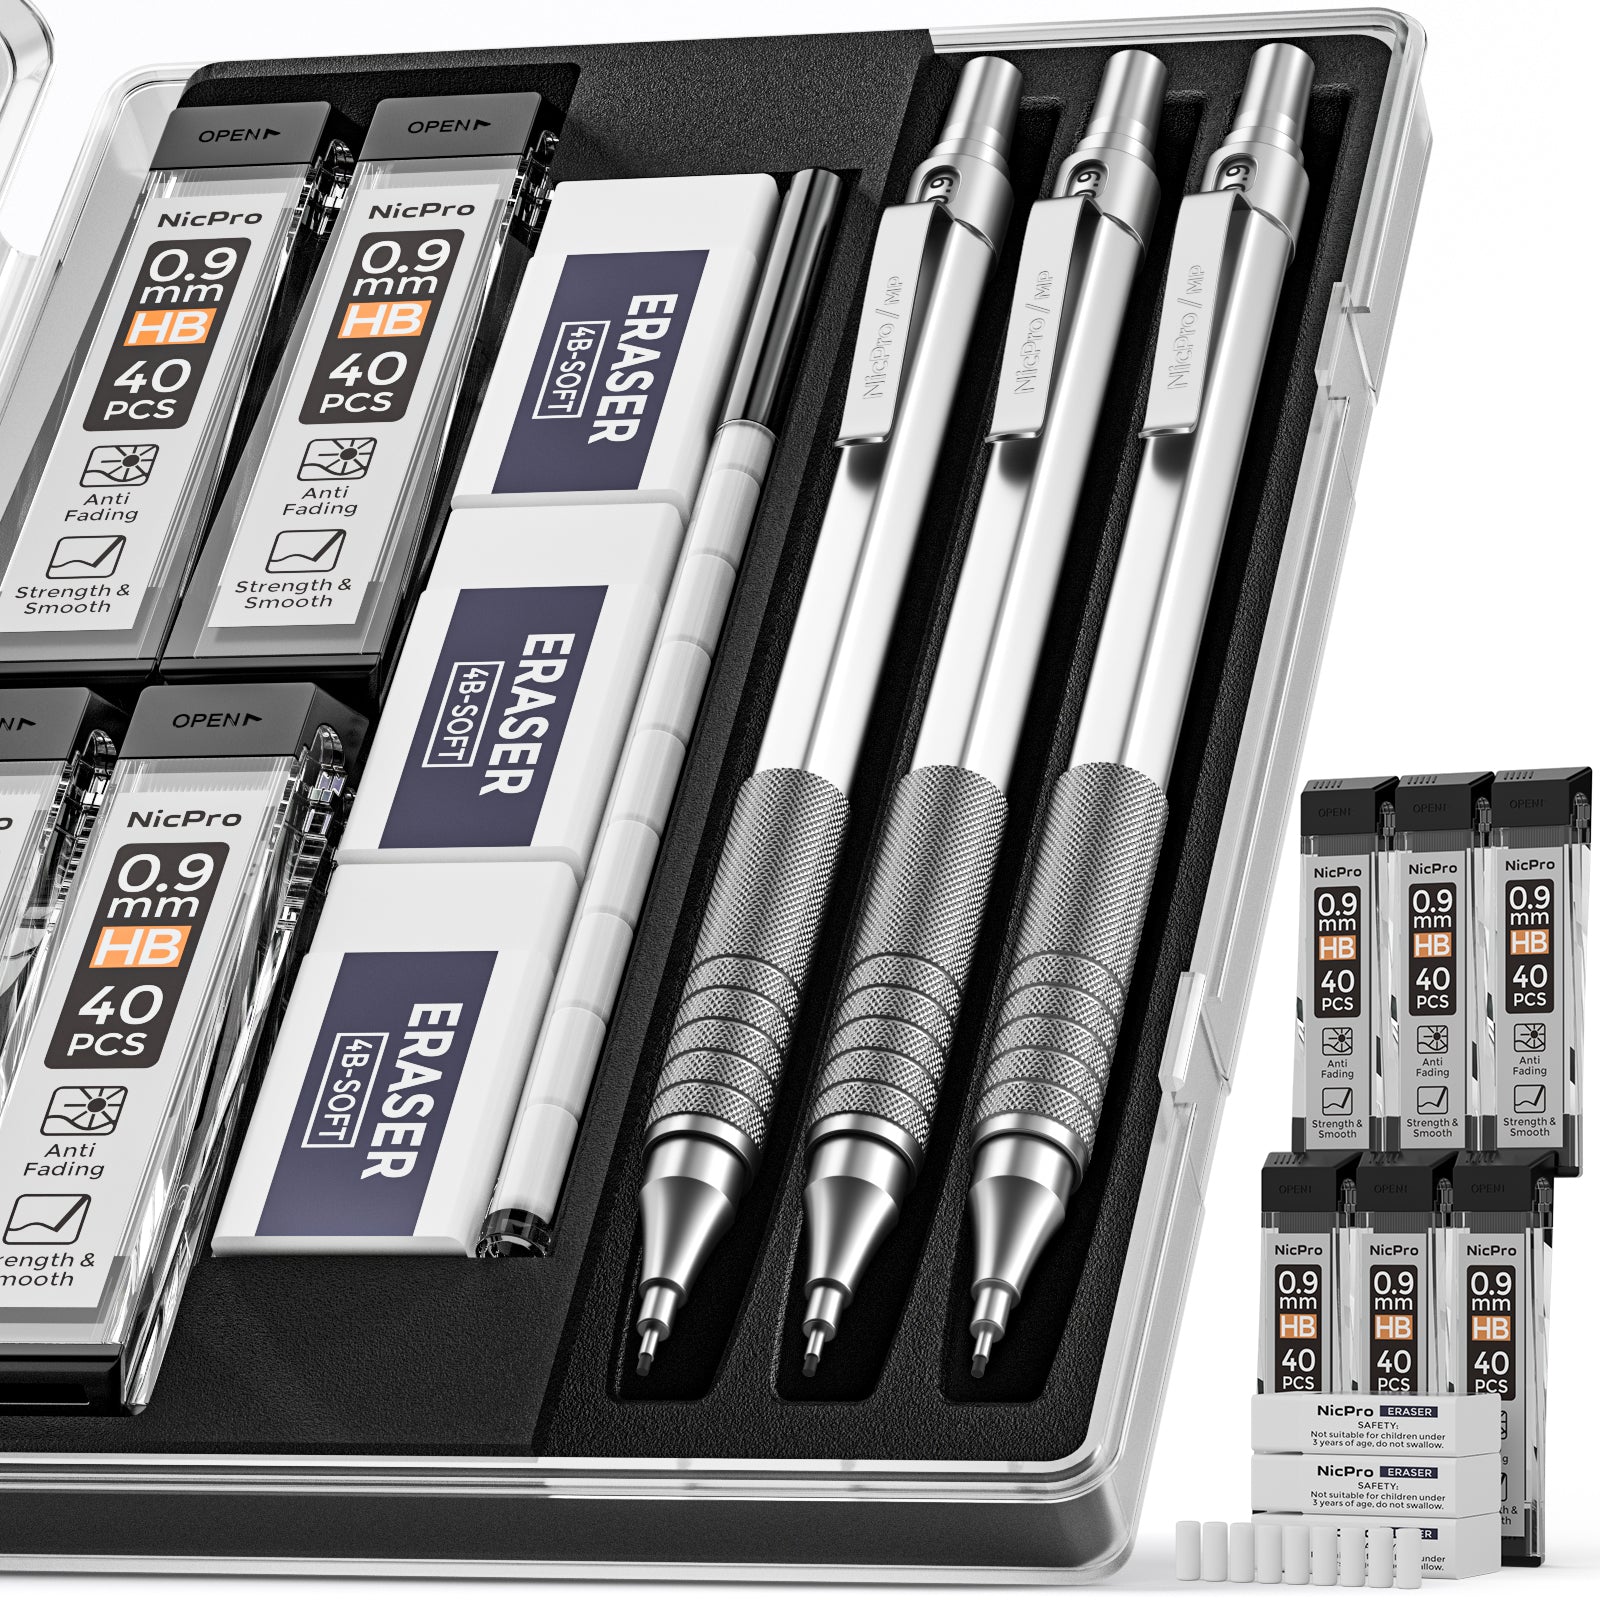 0.7 Mm Art Mechanical Pencils Set, 6 PCS Metal Drafting Pencil 0.7Mm with 6  Tube